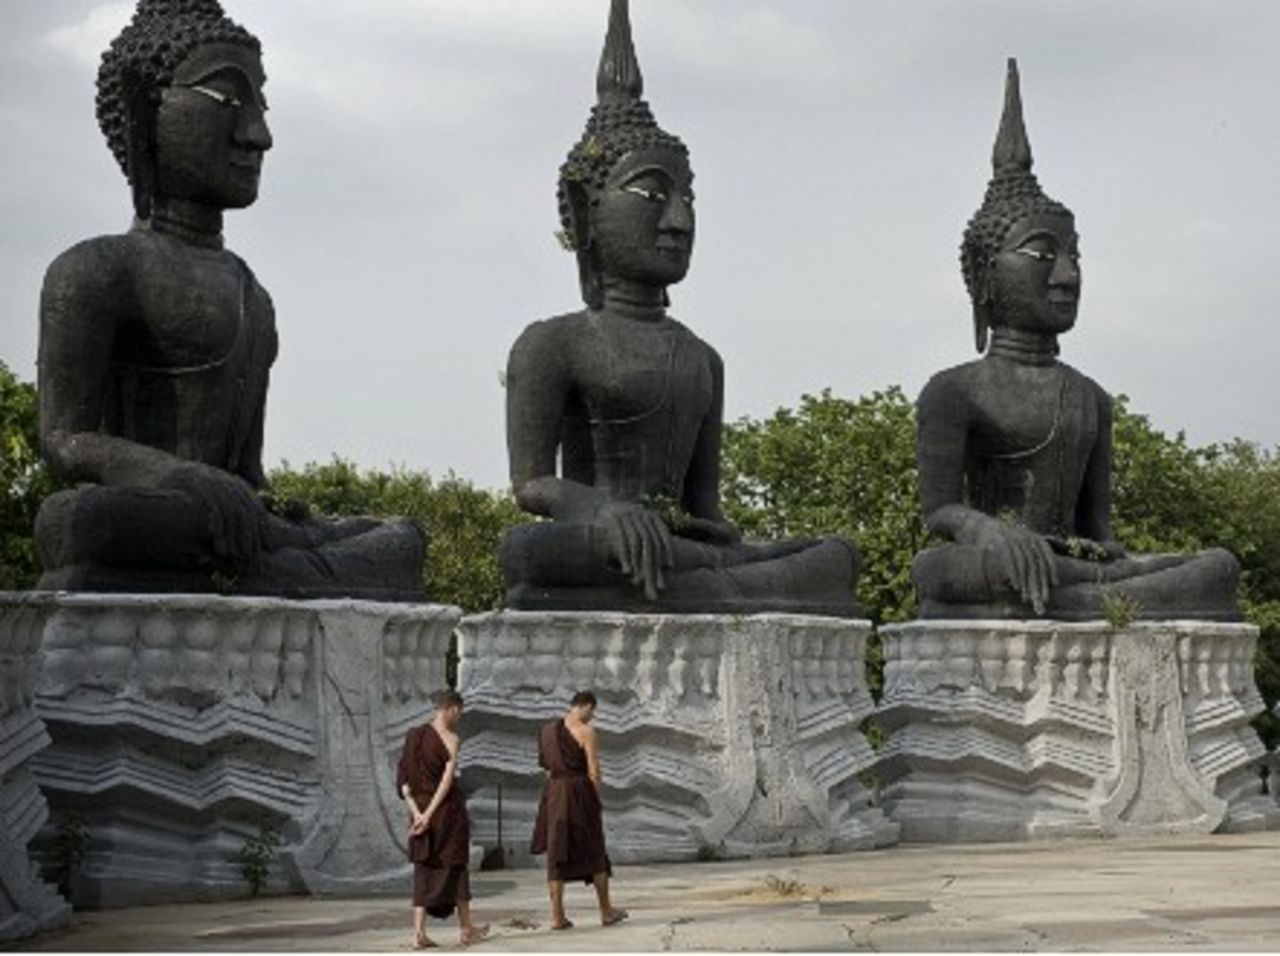 Buddhist monks practice walking meditation at the Thamkrabok monastery in Phraputthabat, Thailand.